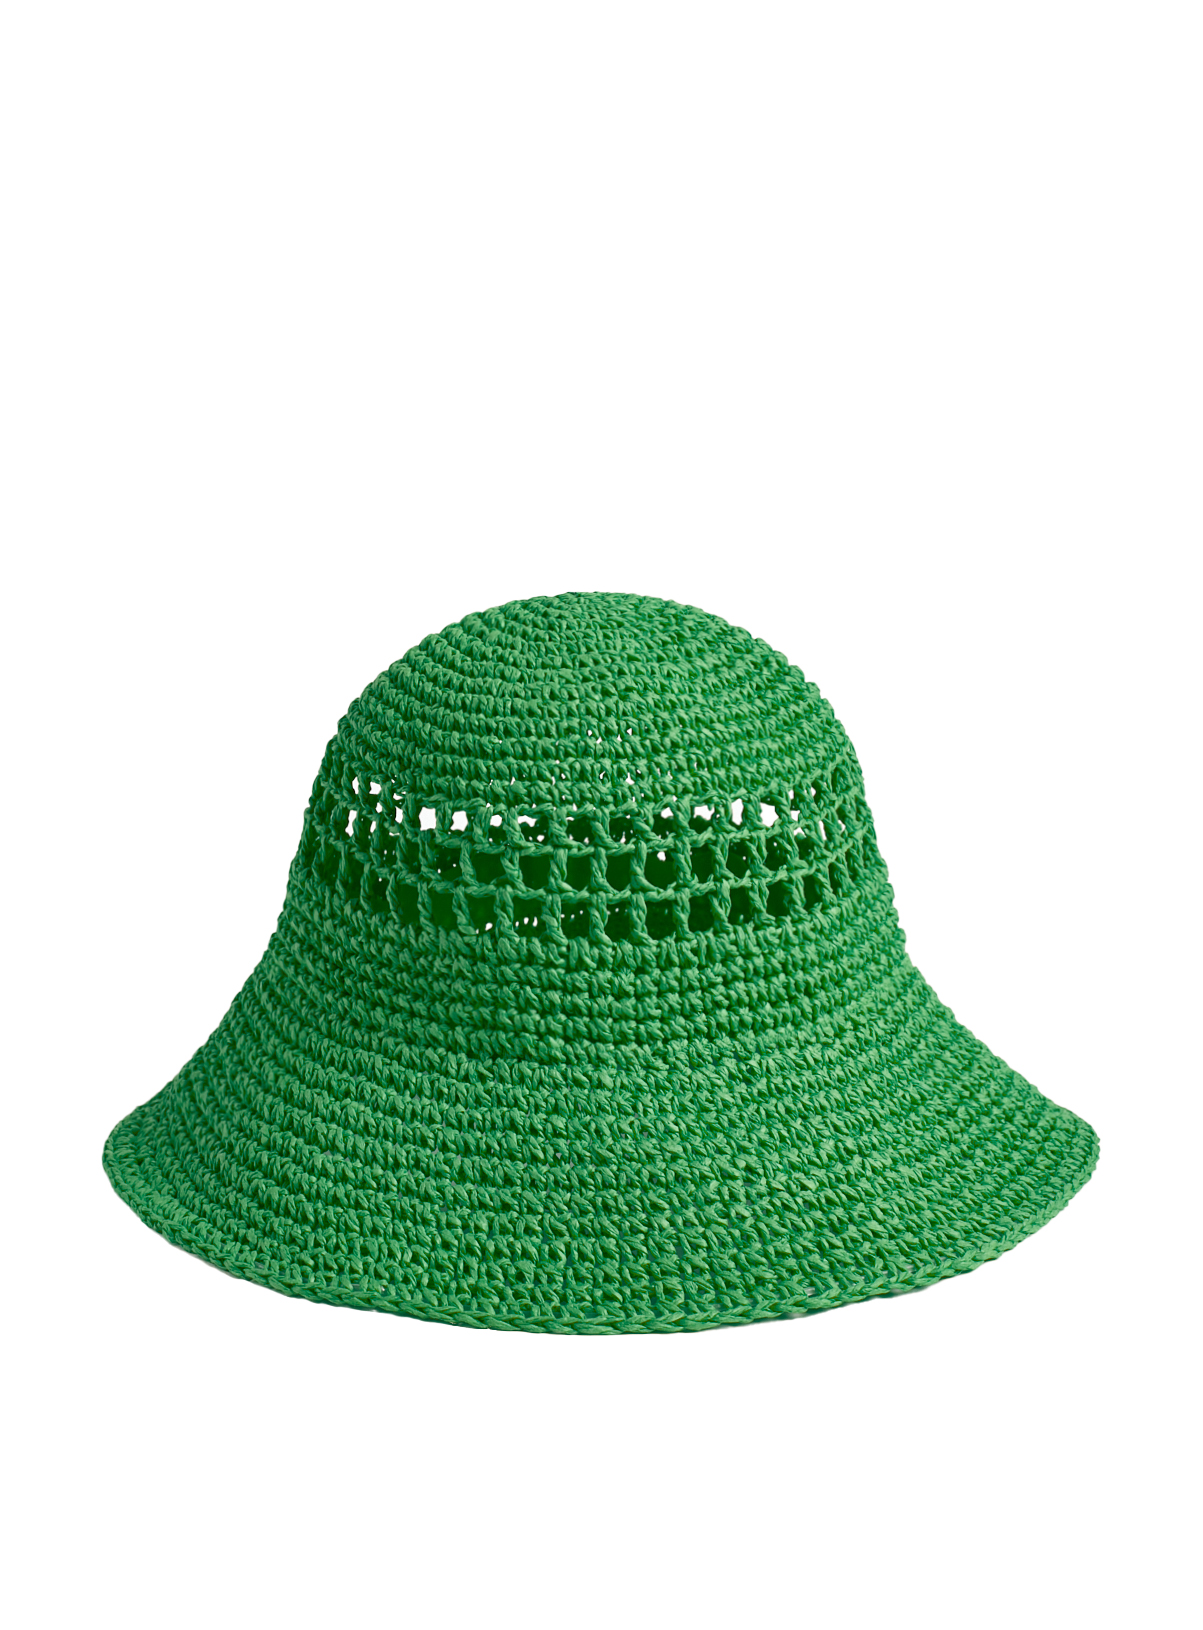 Tu green straw hat